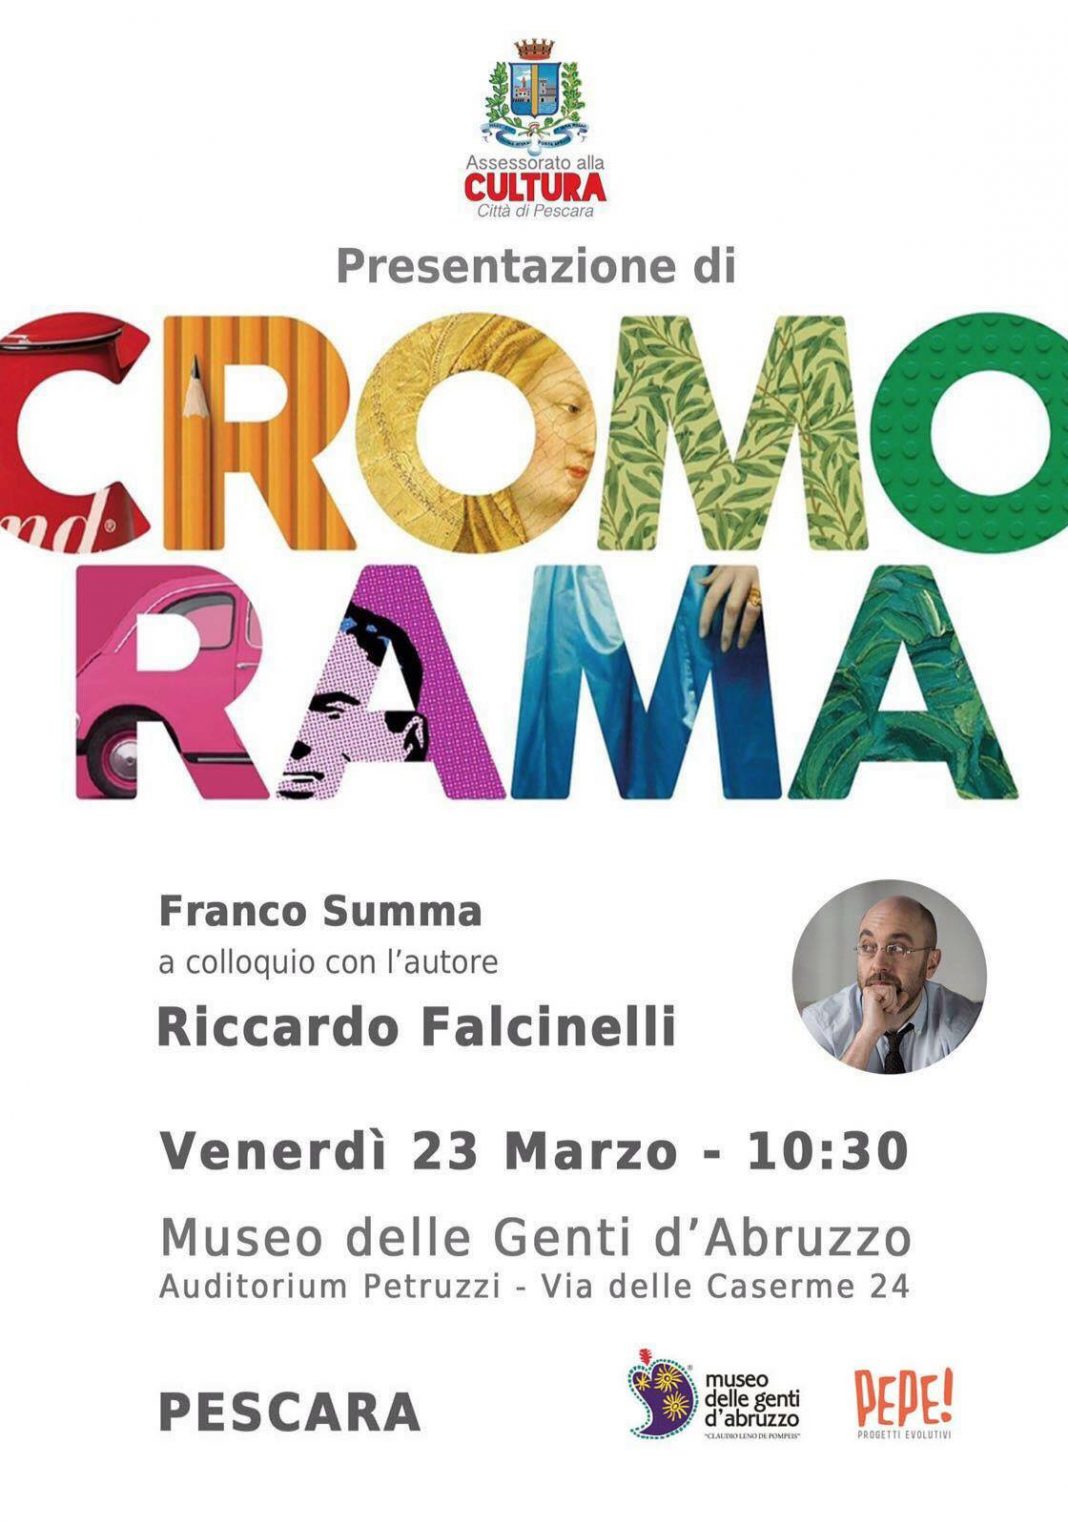 Riccardo Falcinelli / Franco Summa – Cromoramahttps://www.exibart.com/repository/media/eventi/2018/03/riccardo-falcinelli-franco-summa-8211-cromorama-1068x1526.jpg